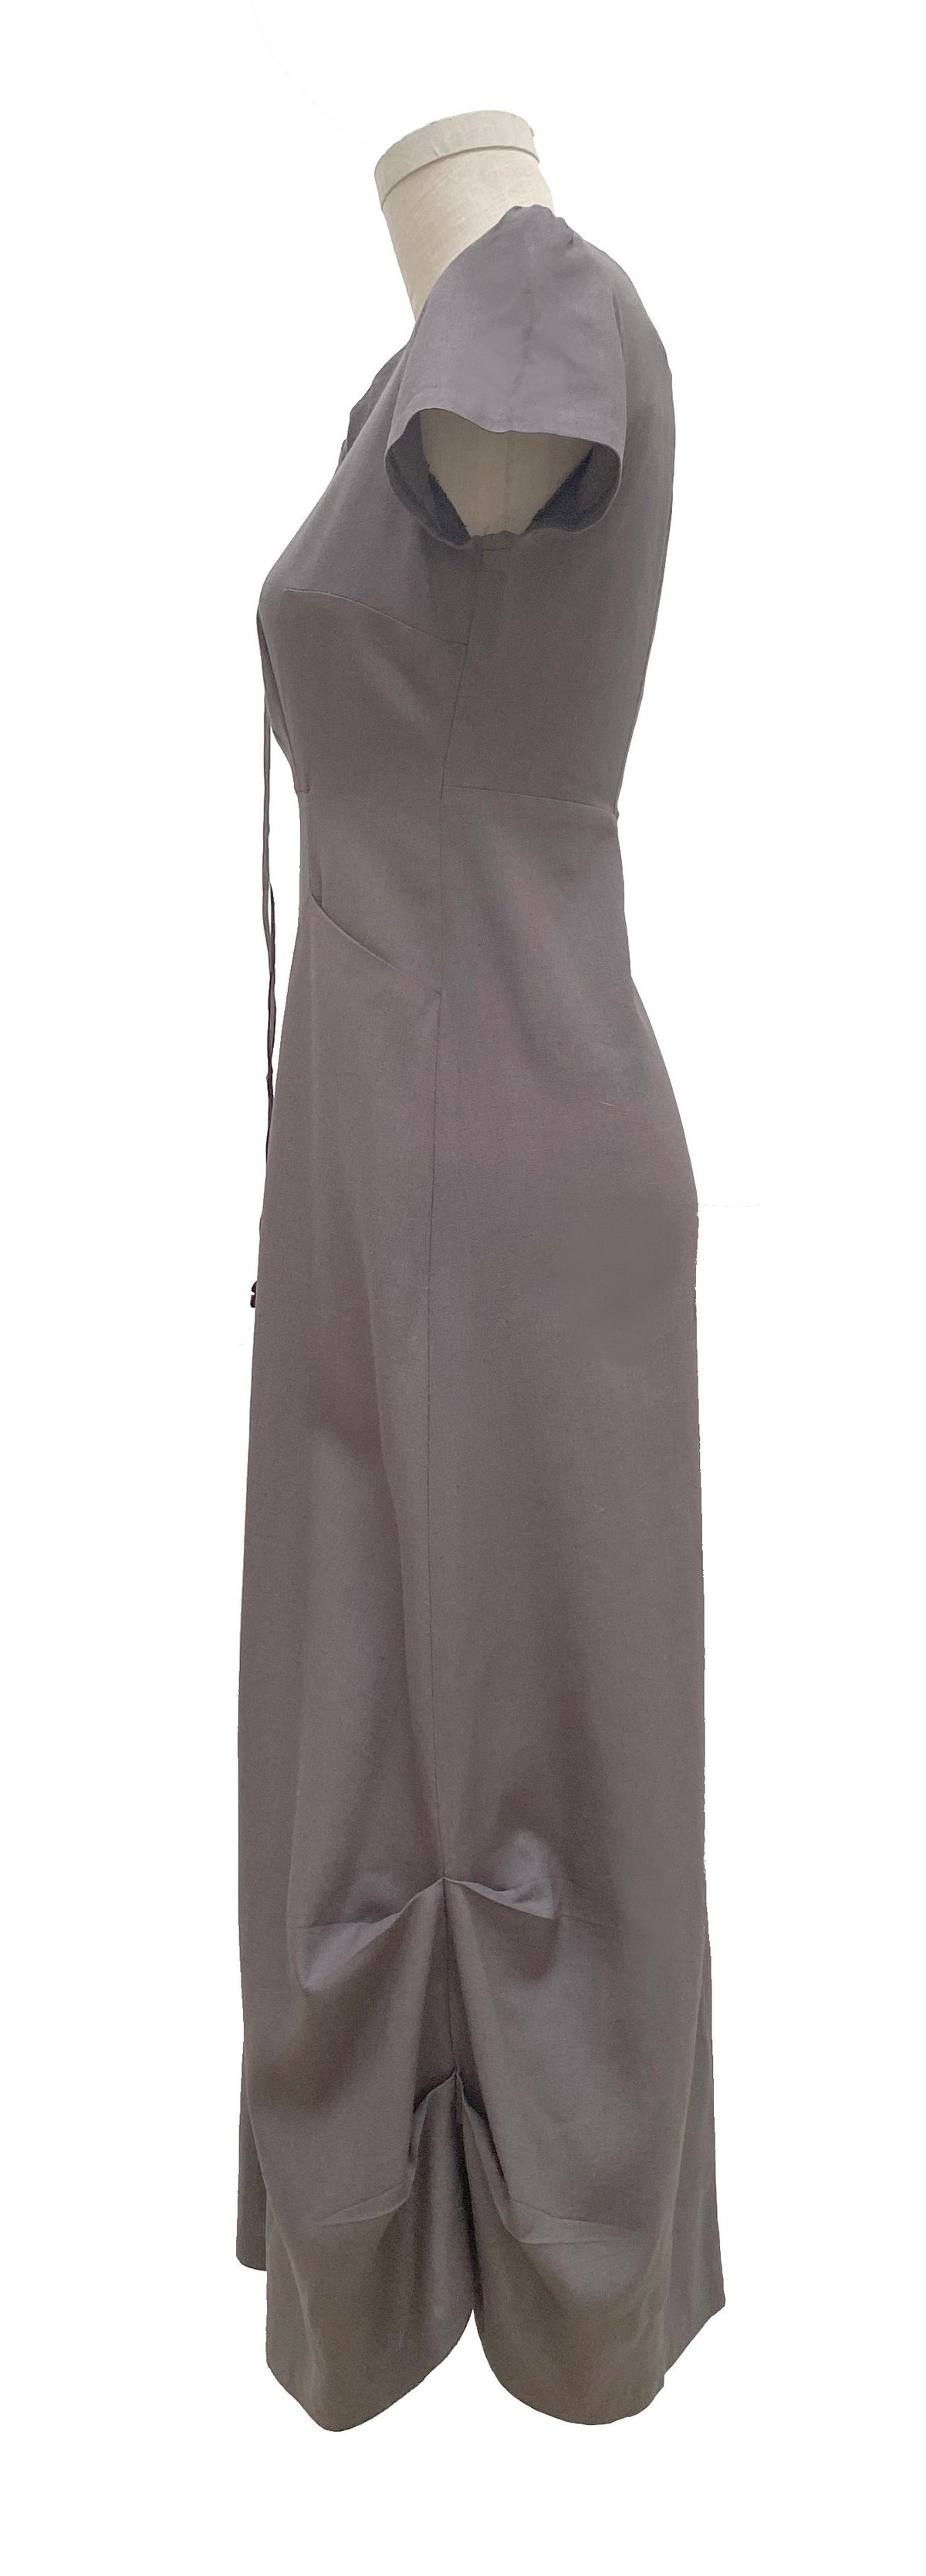 Image of Hildegard dress in gray